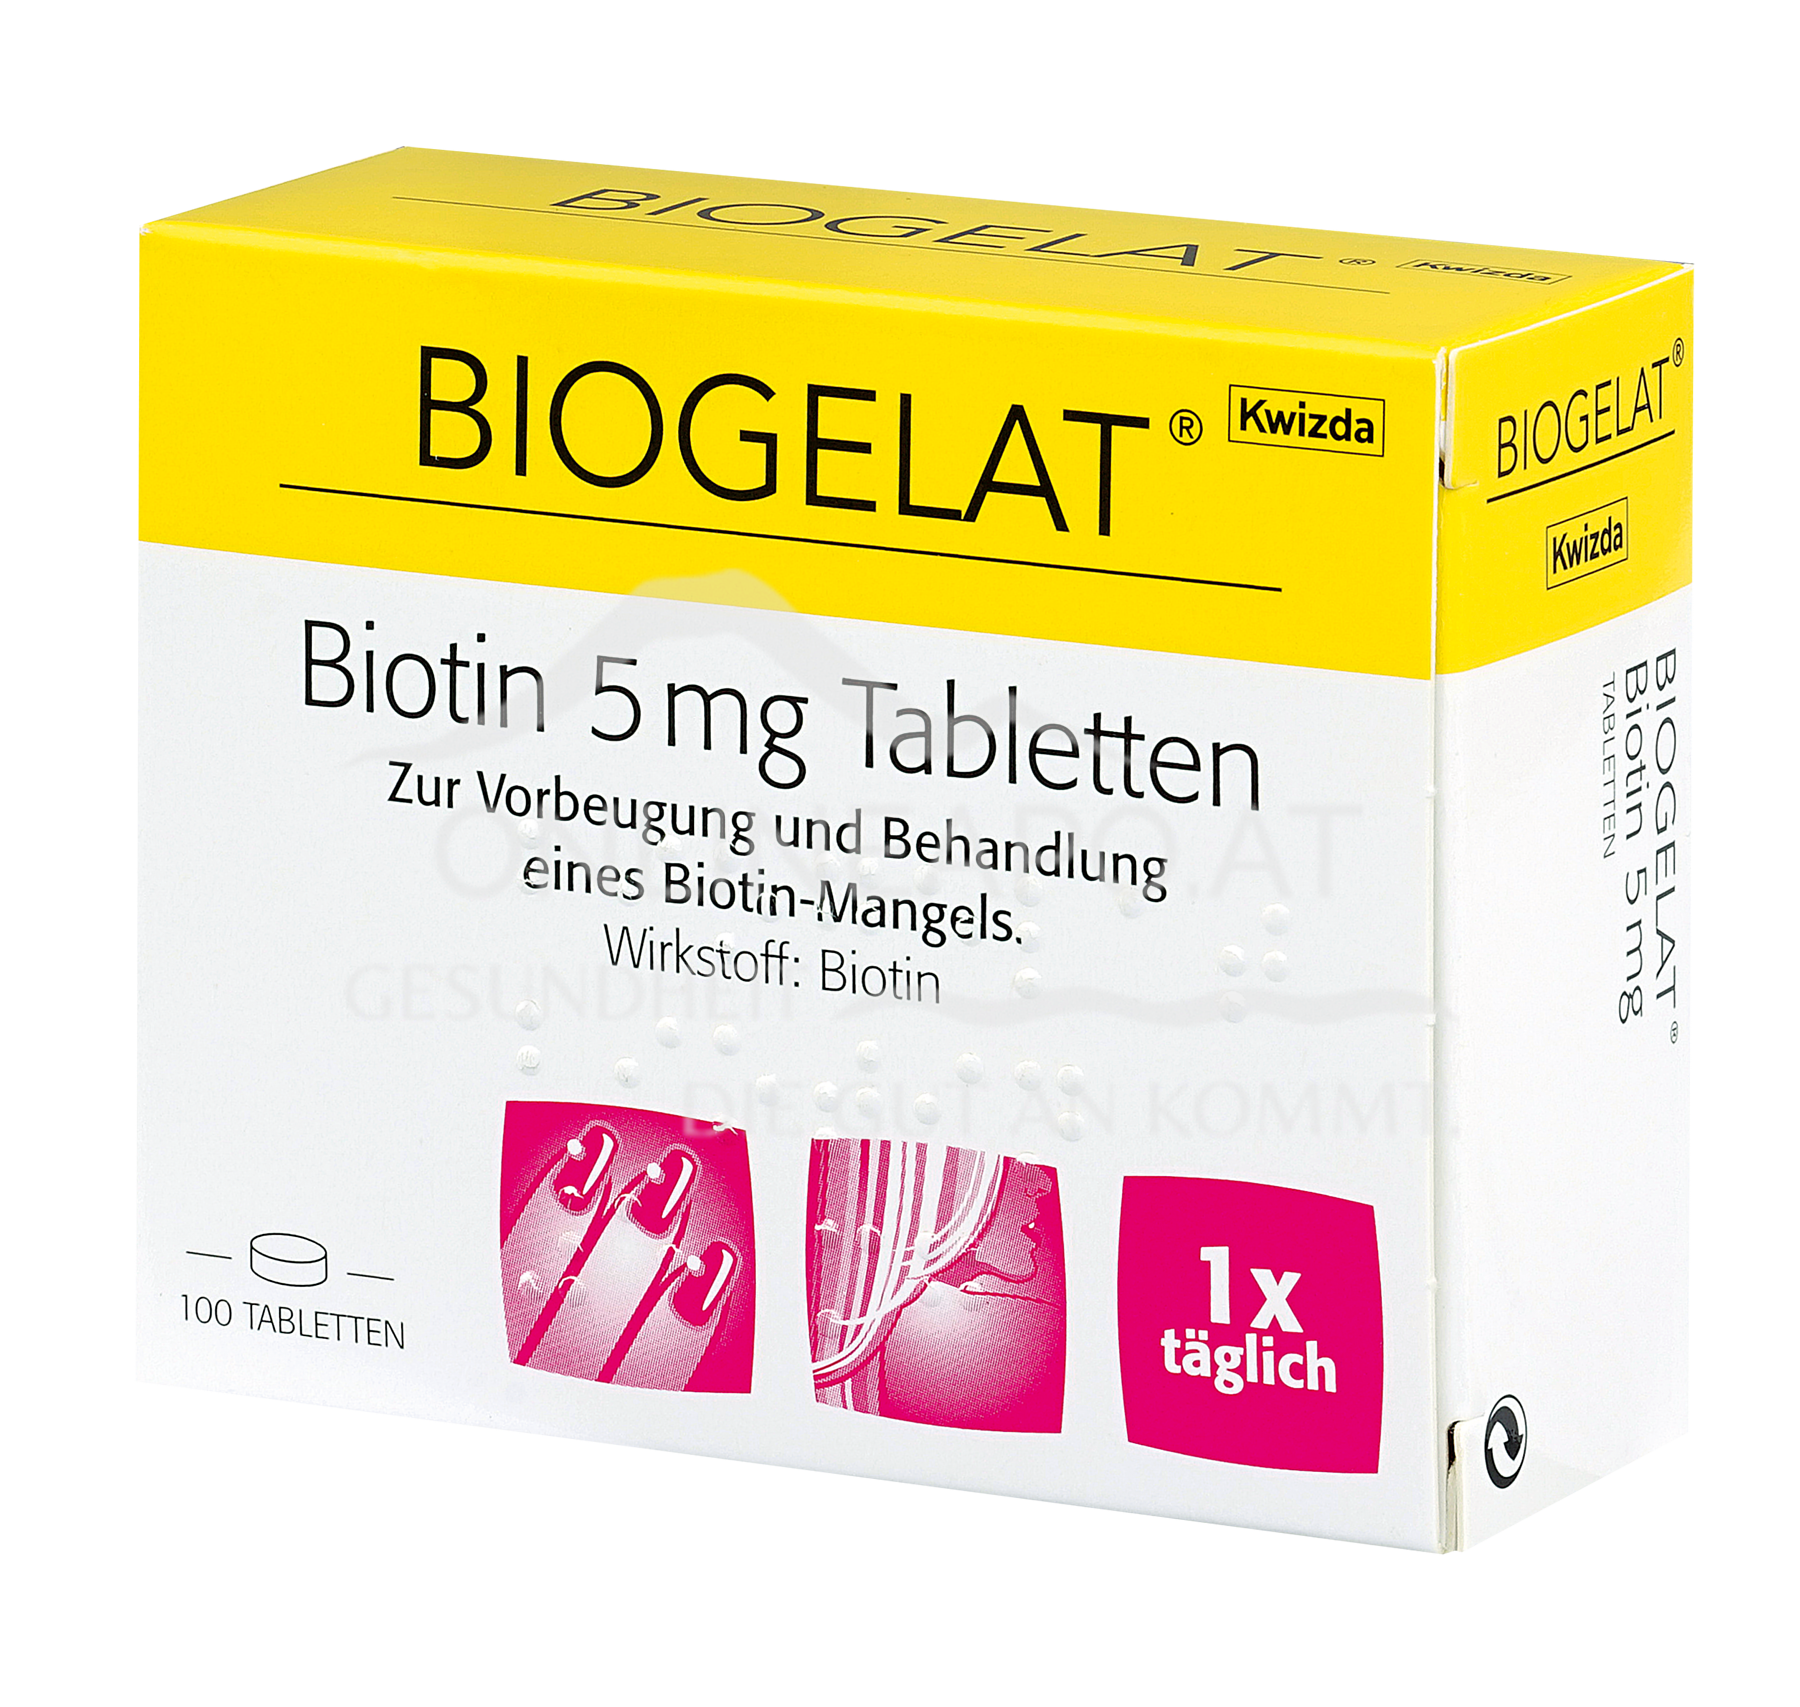 BIOGELAT® Biotin 5mg Tabletten